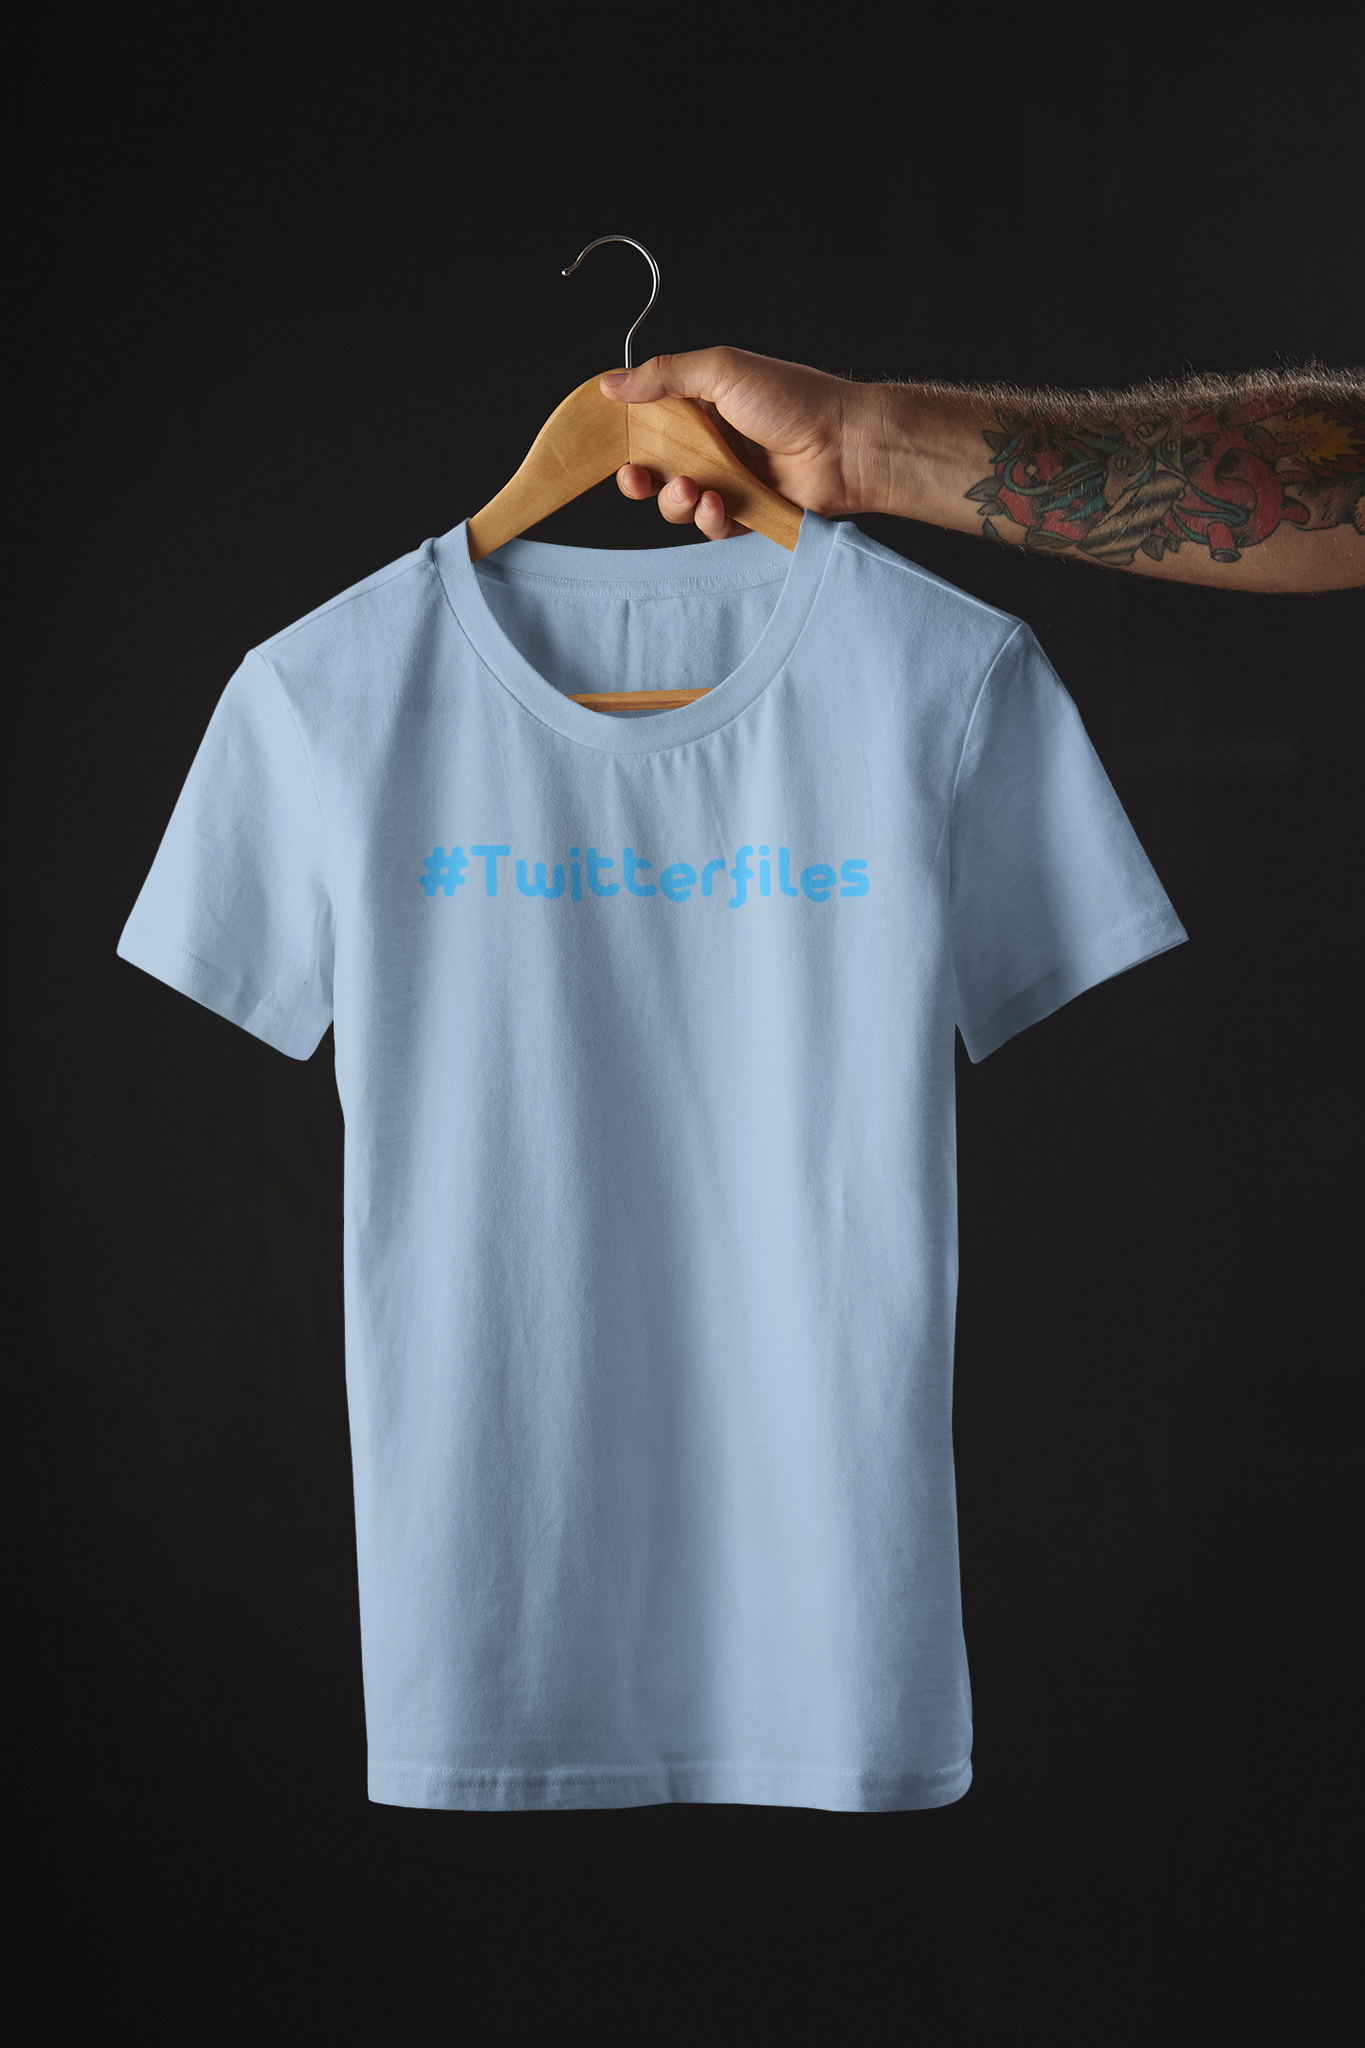 T-Shirt Men Statements Clothing